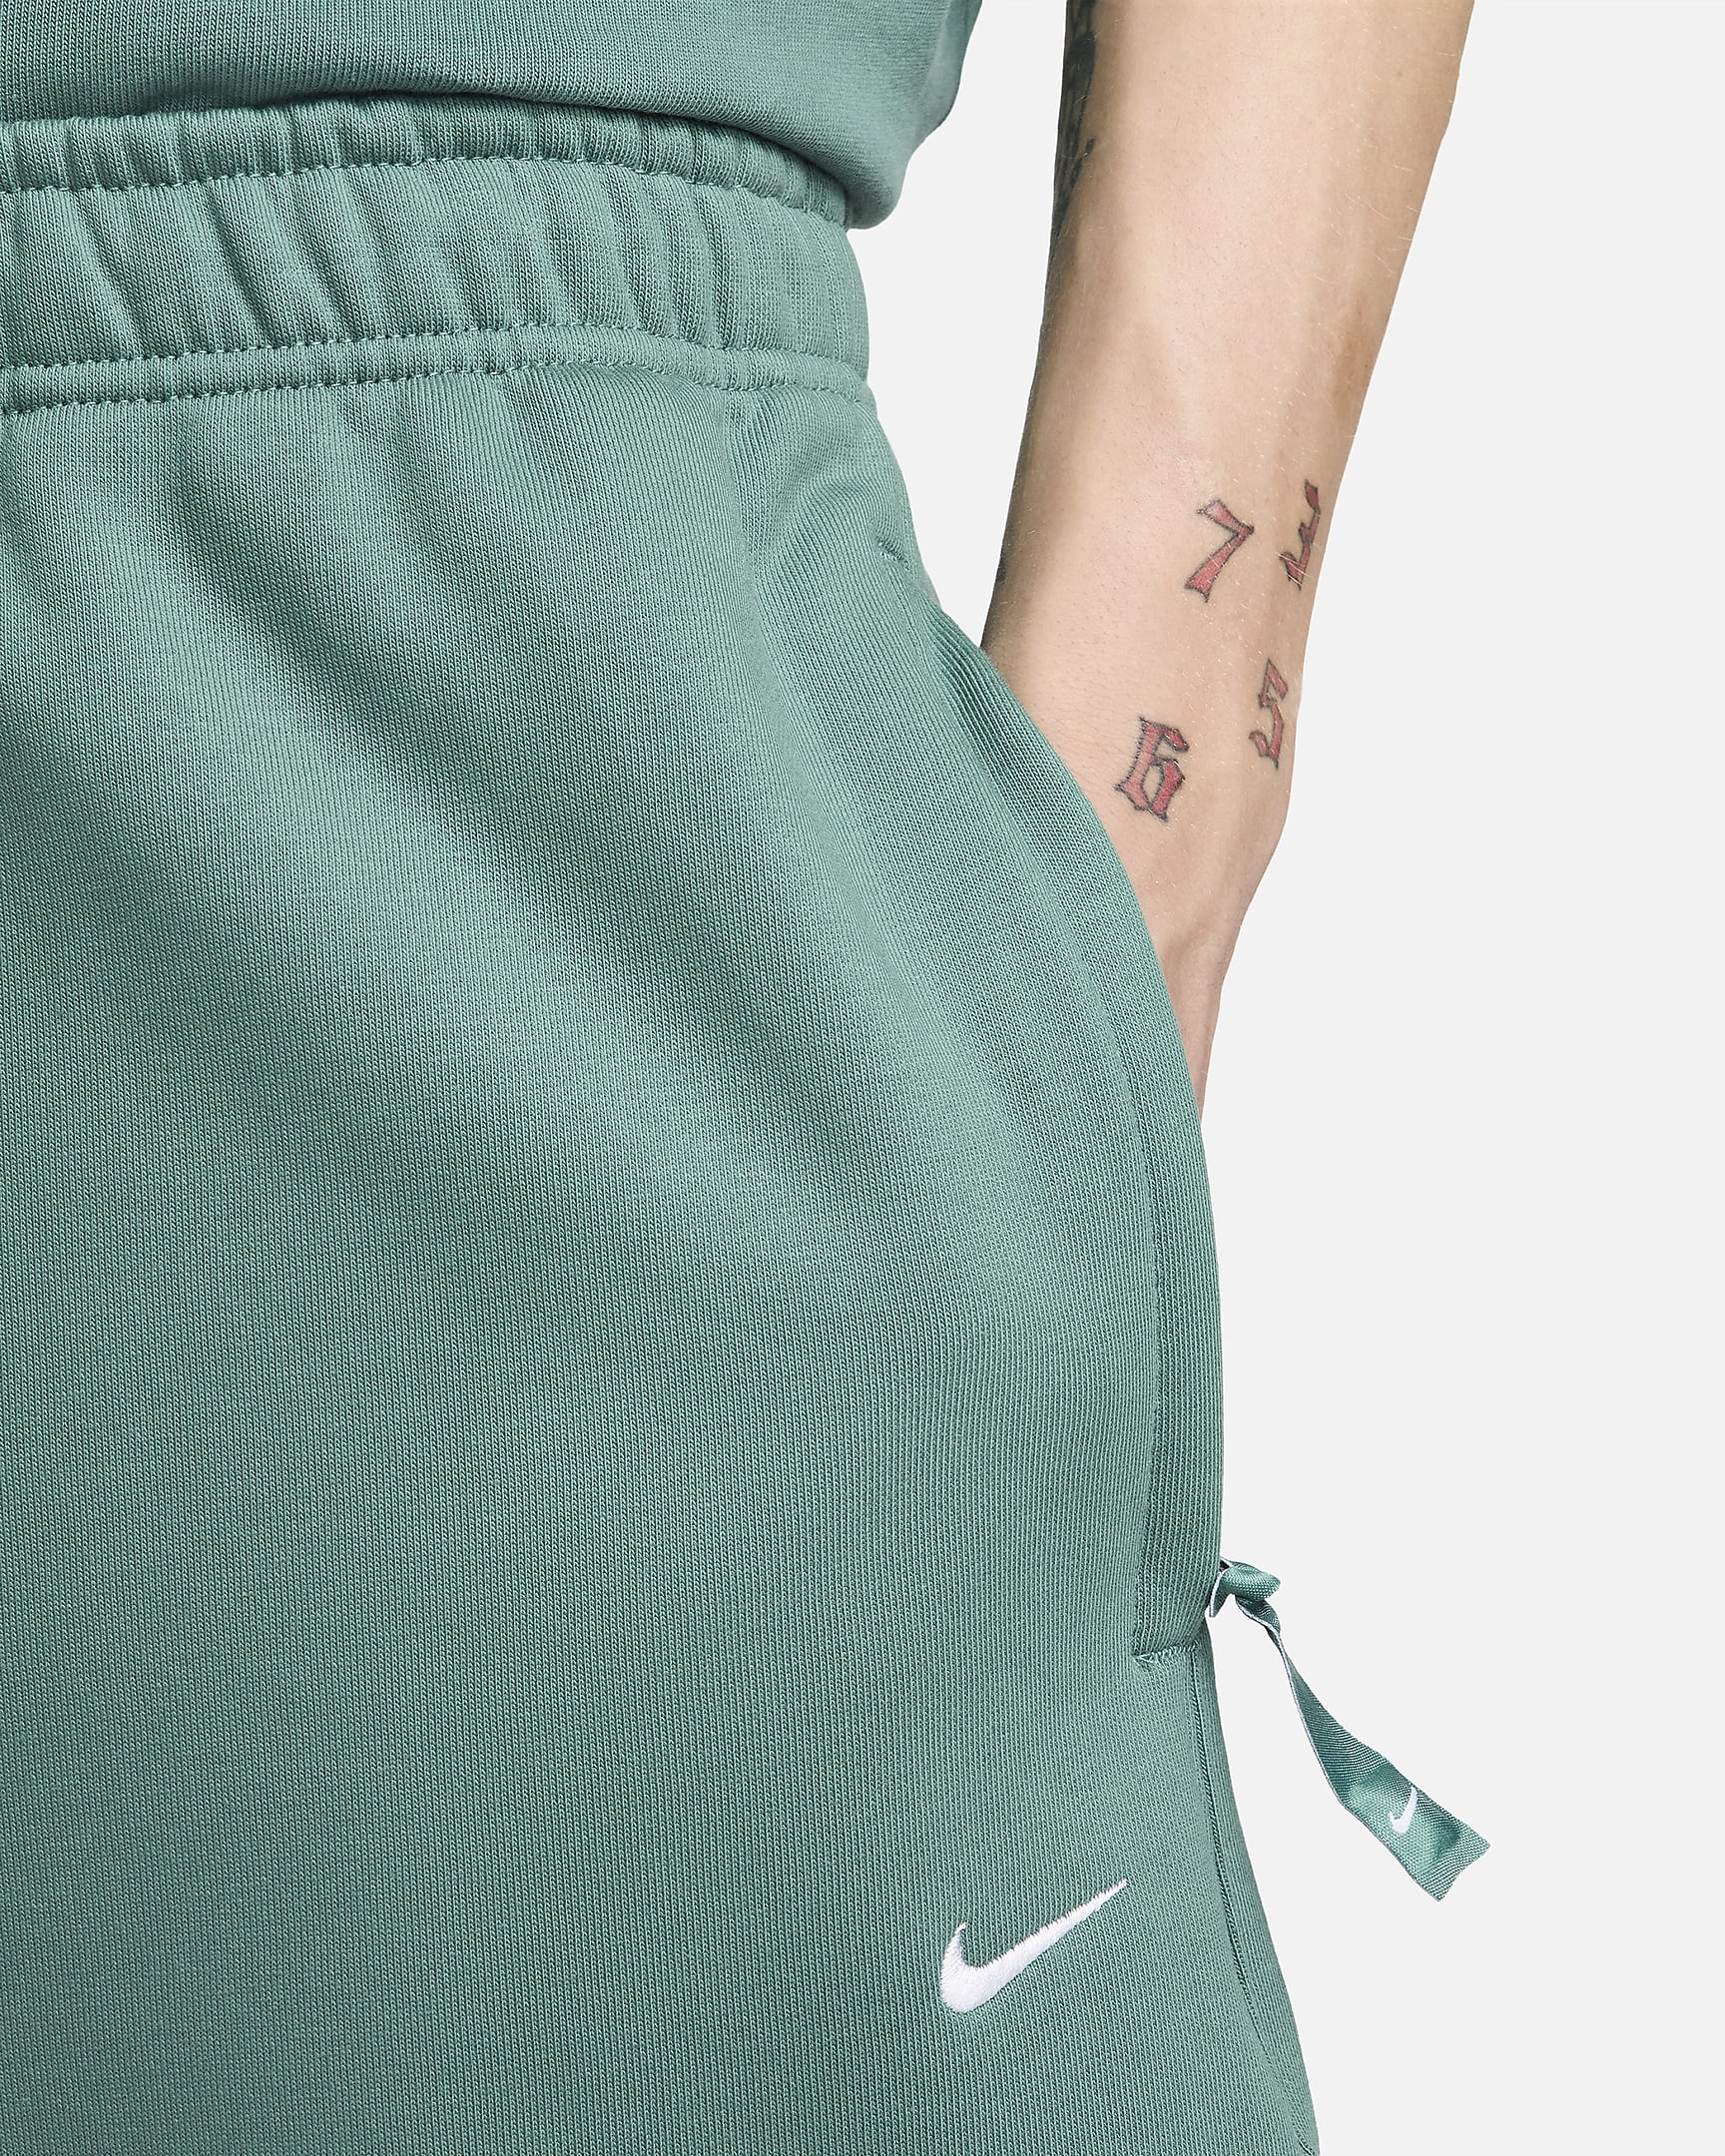 Pantalon en tissu Fleece Nike Solo Swoosh pour Homme - Bicoastal/Blanc